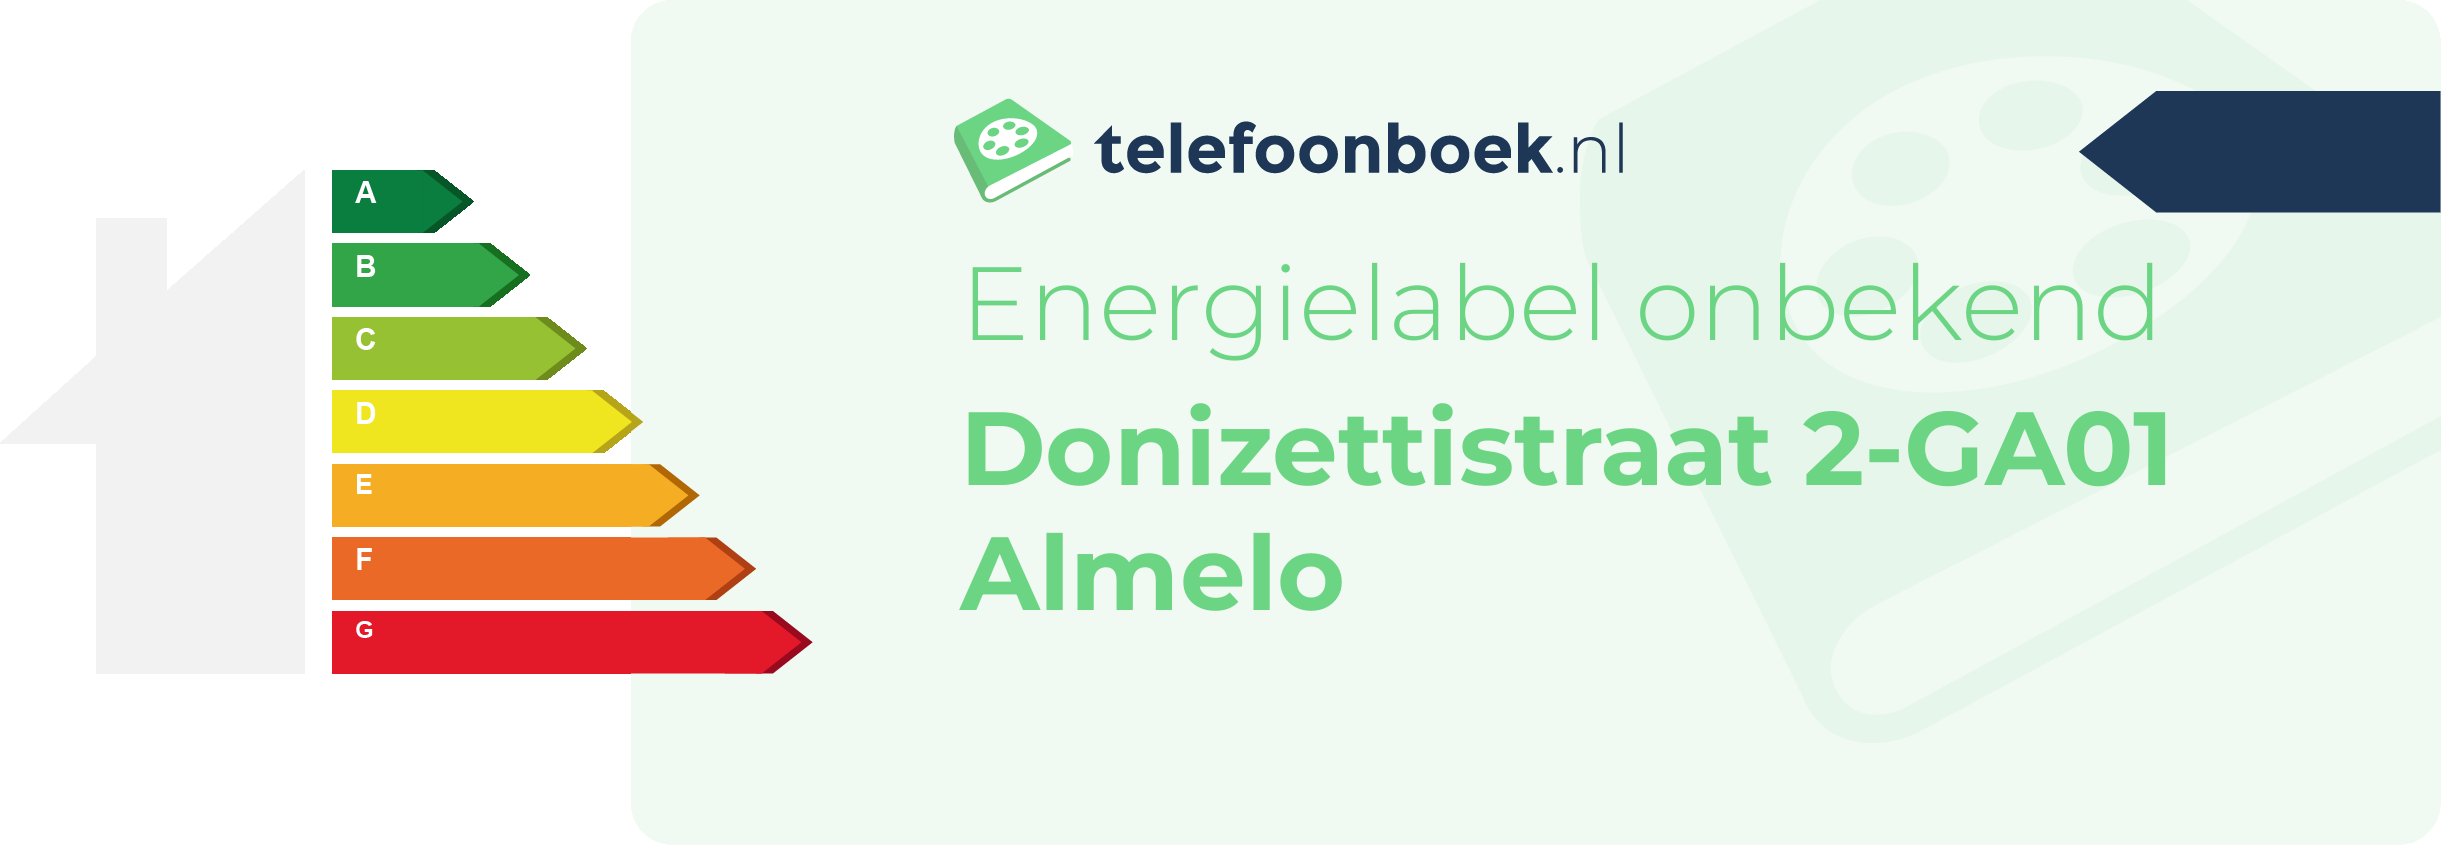 Energielabel Donizettistraat 2-GA01 Almelo